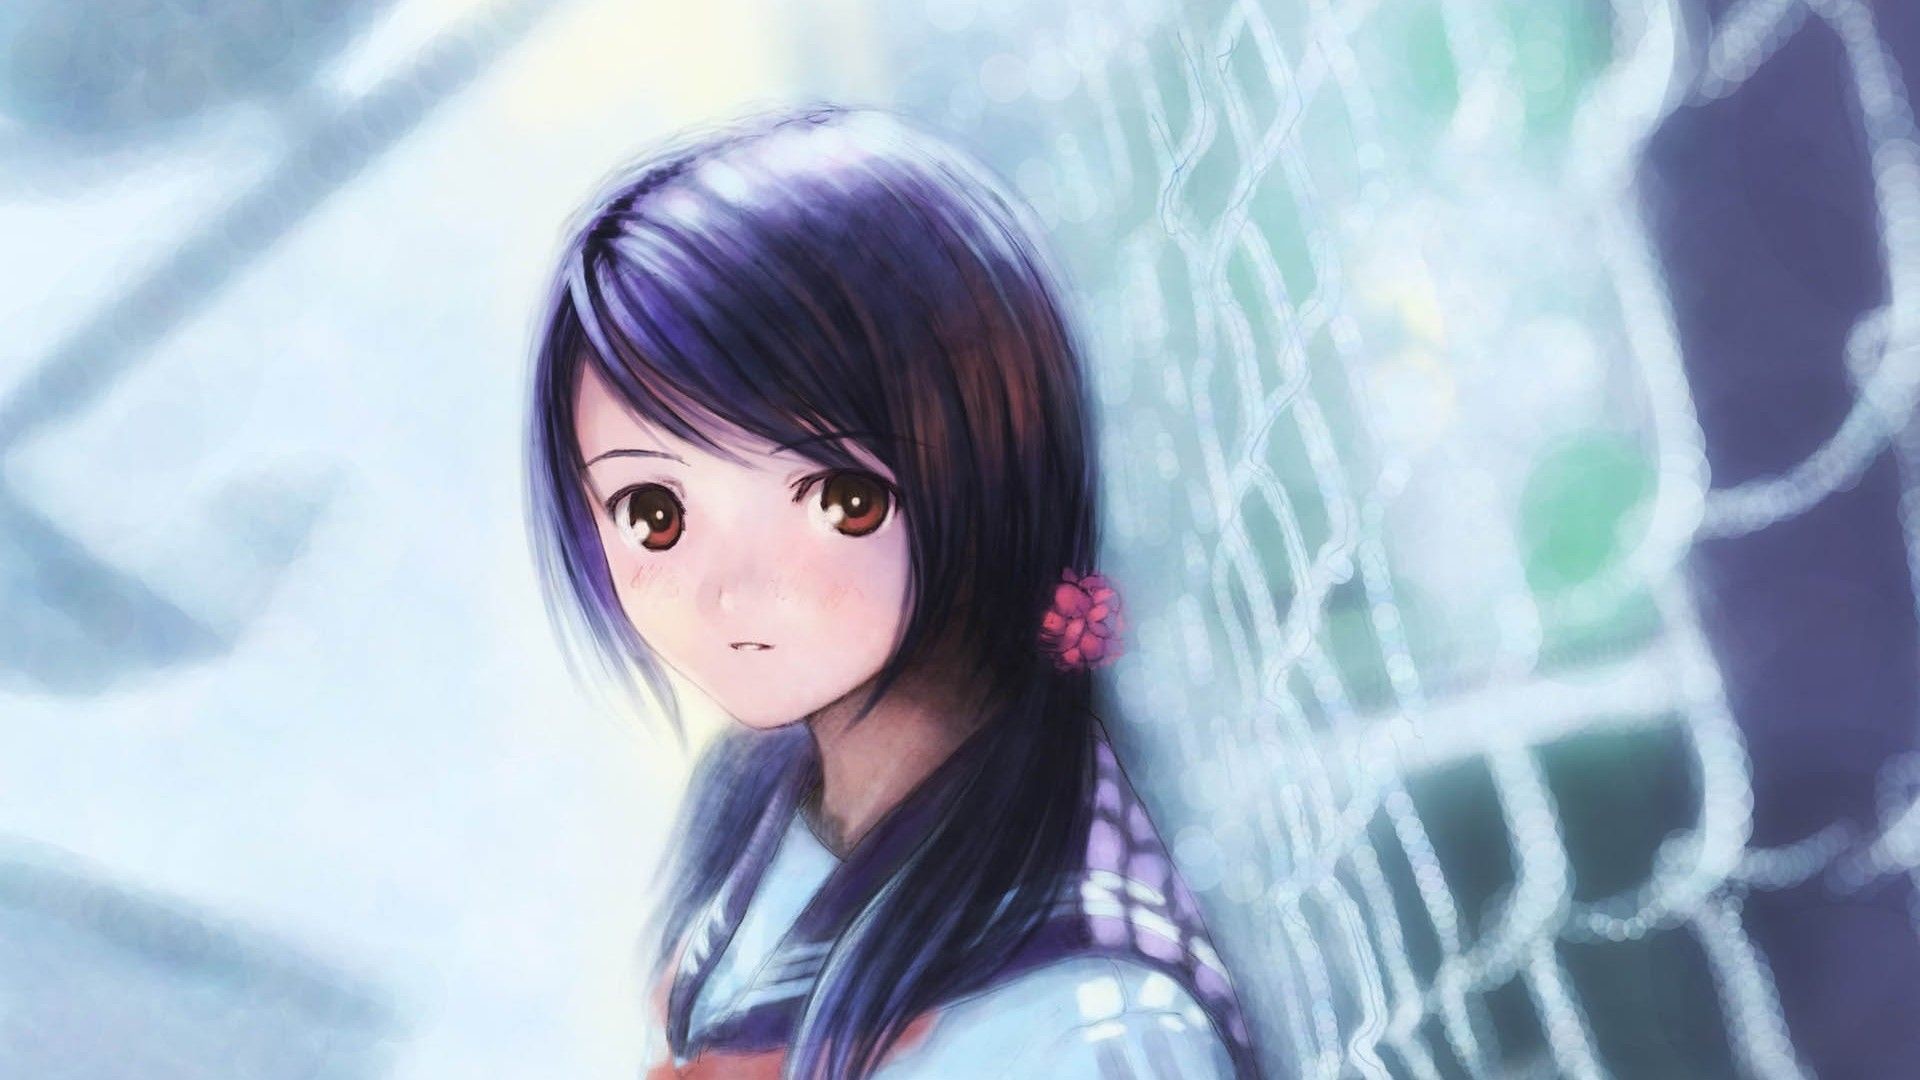 Cute Anime Girls HD Wallpaper Image